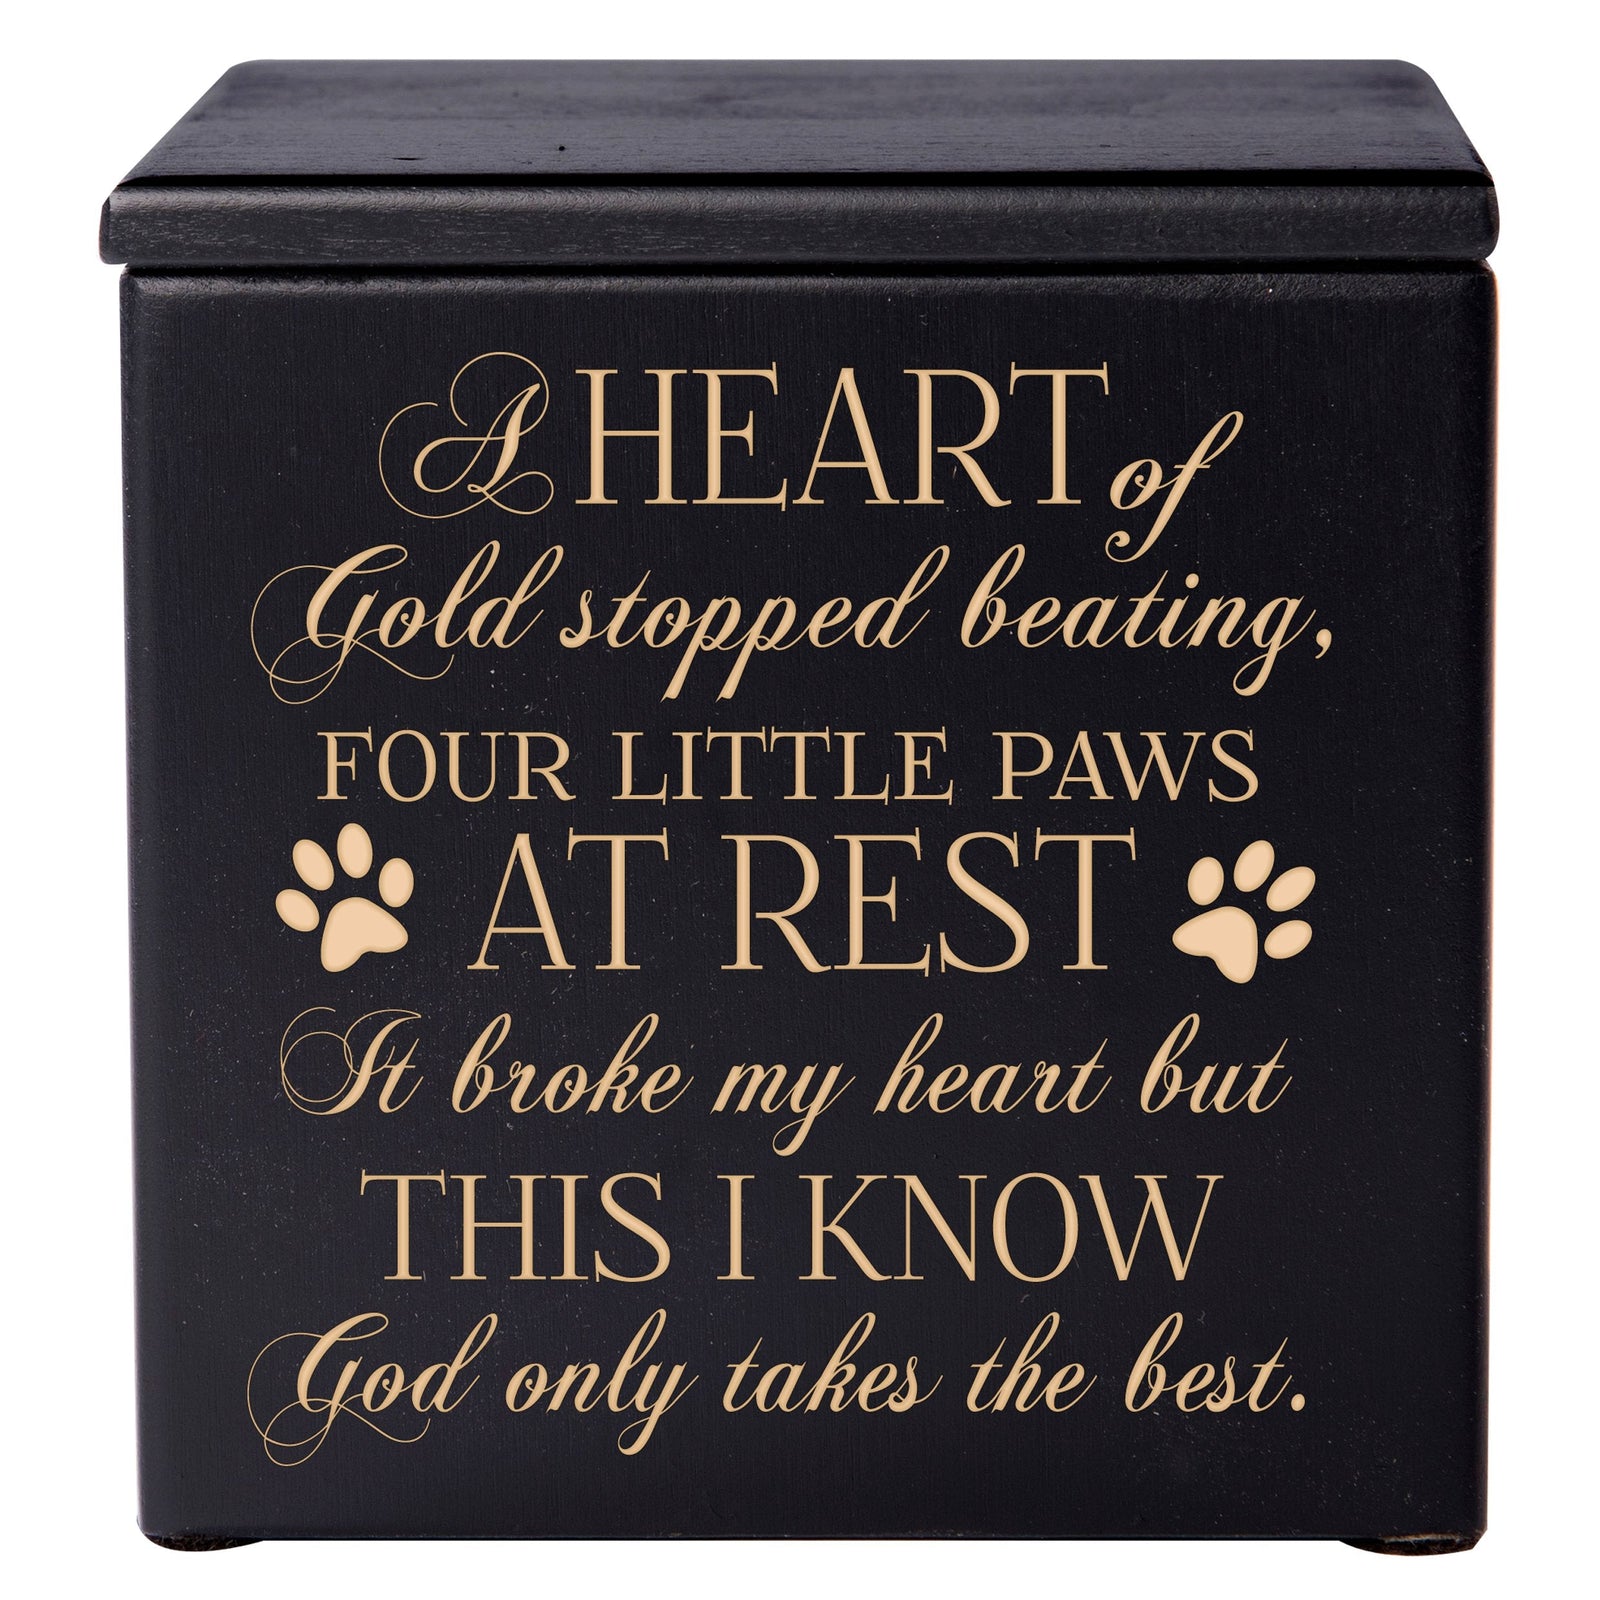 Black Pet Memorial 3.5x3.5 Keepsake Urn with phrase "Heart of Gold"